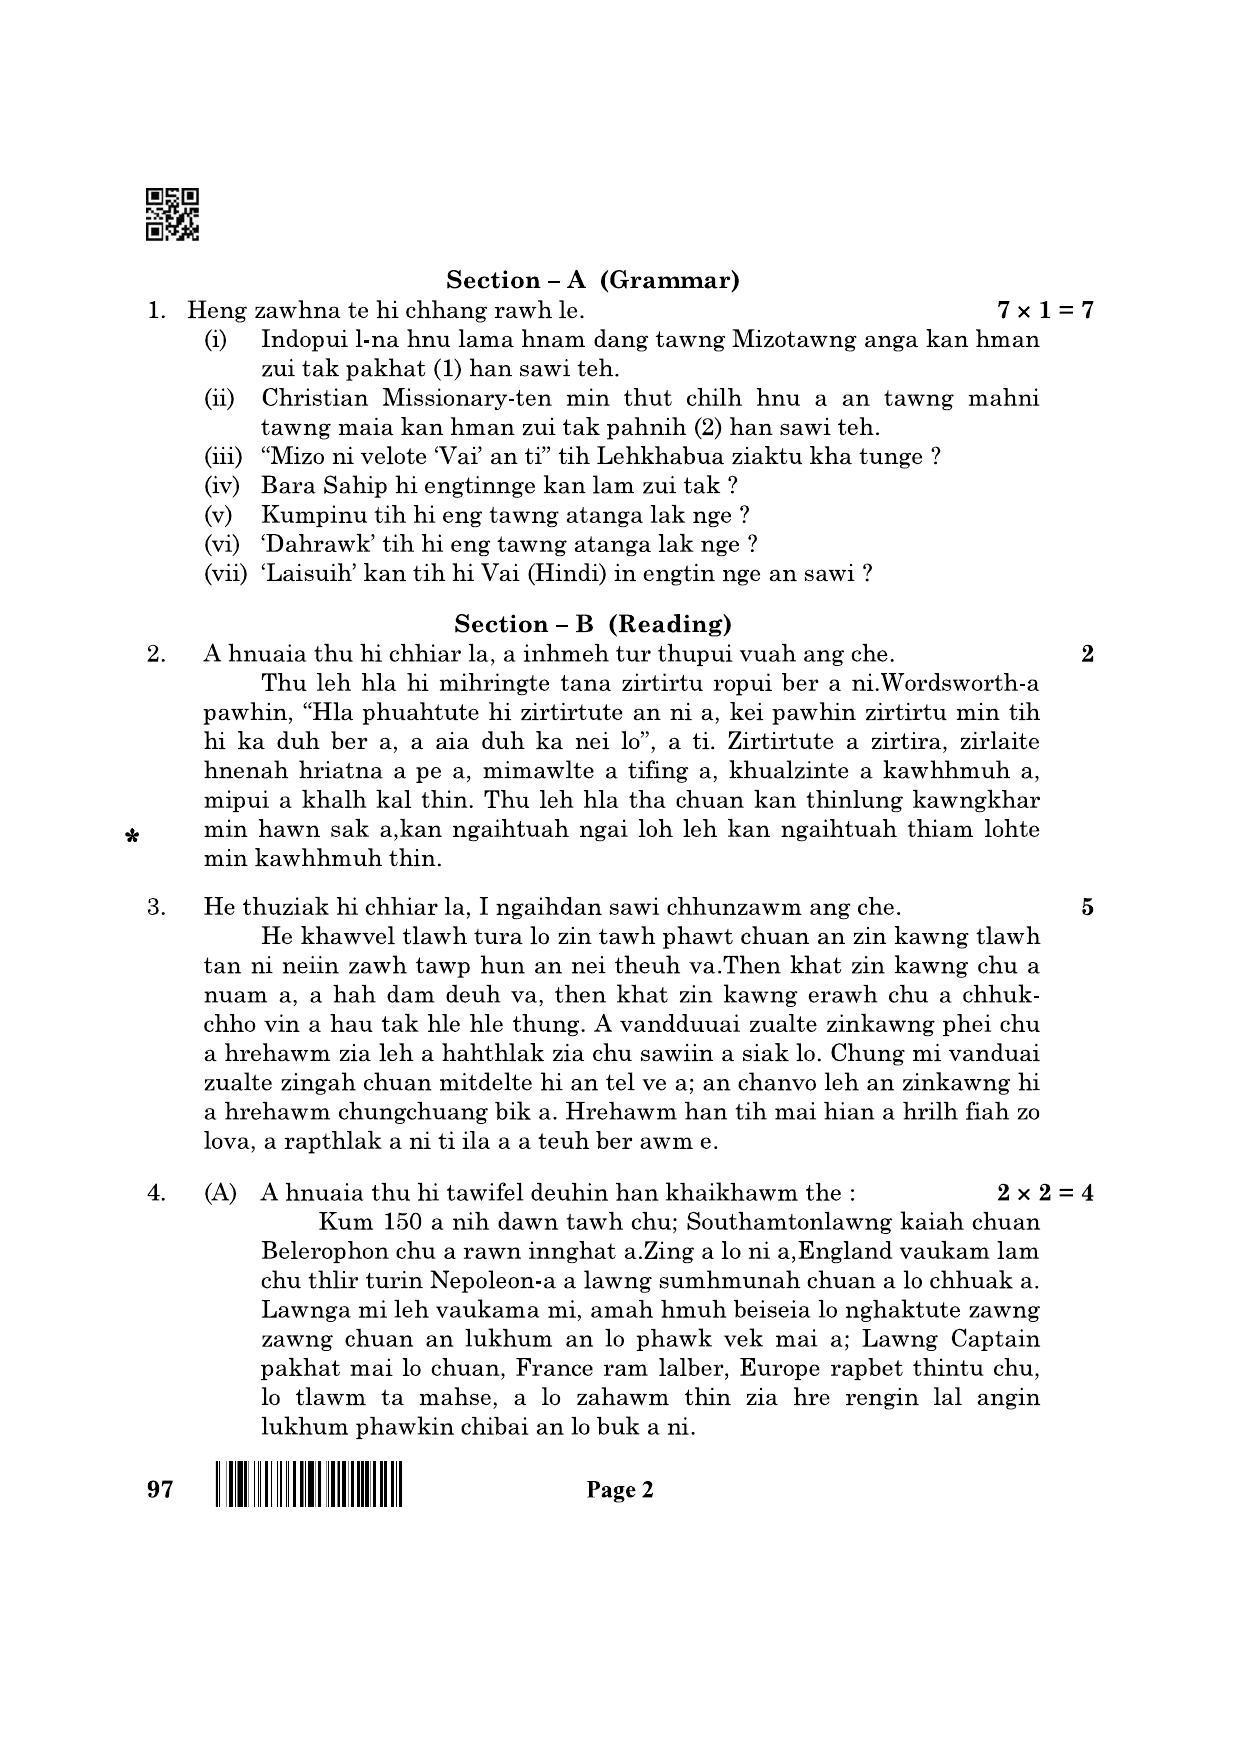 CBSE Class 12 97_Mizo 2022 Question Paper - Page 2